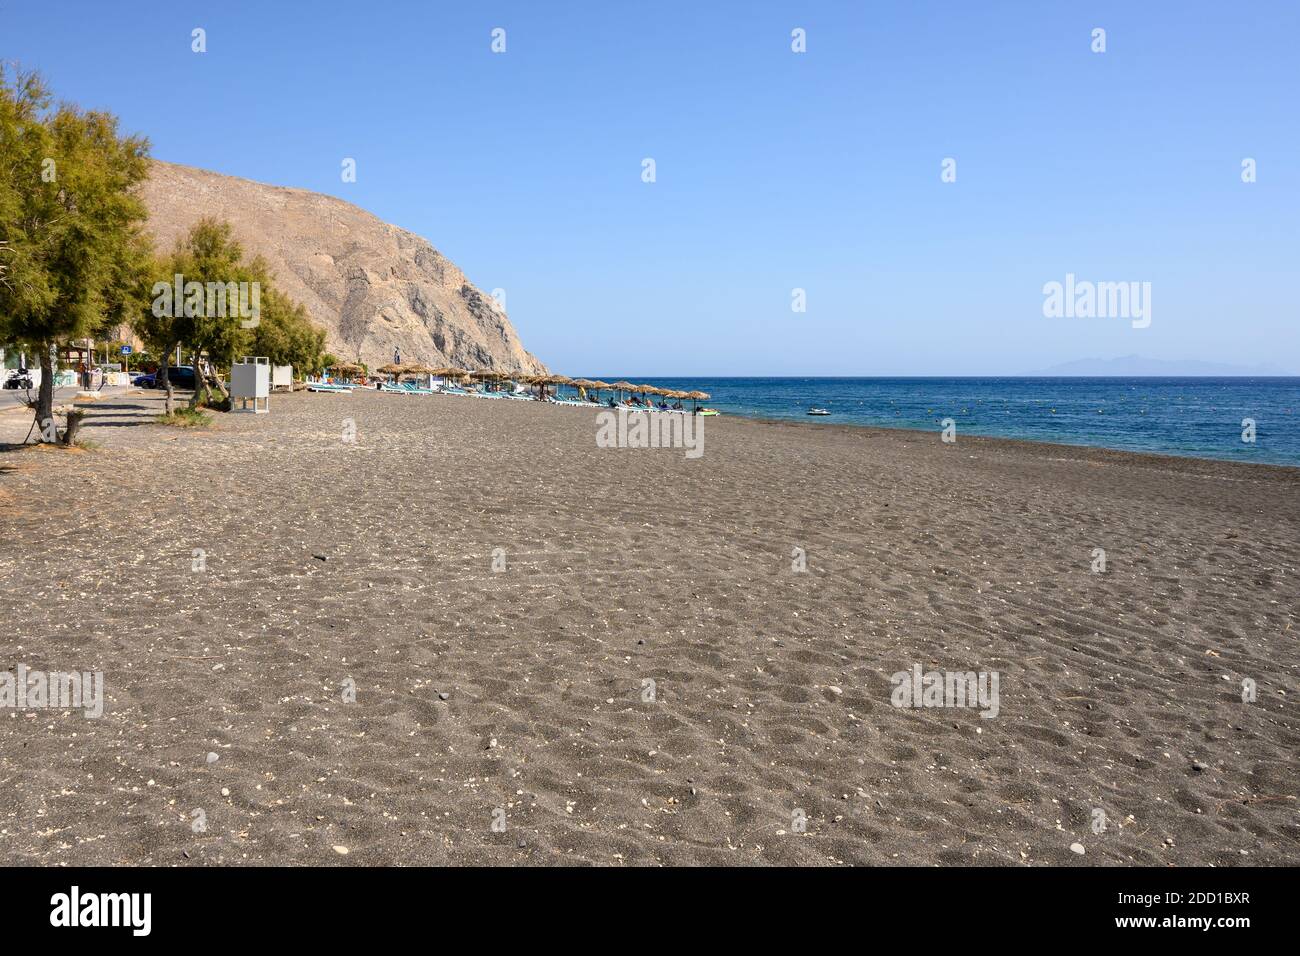 Santorini, Greece - September 17, 2020: View of black sand beach of Perissa on the island of Santorini. Cyclades, Greece Stock Photo